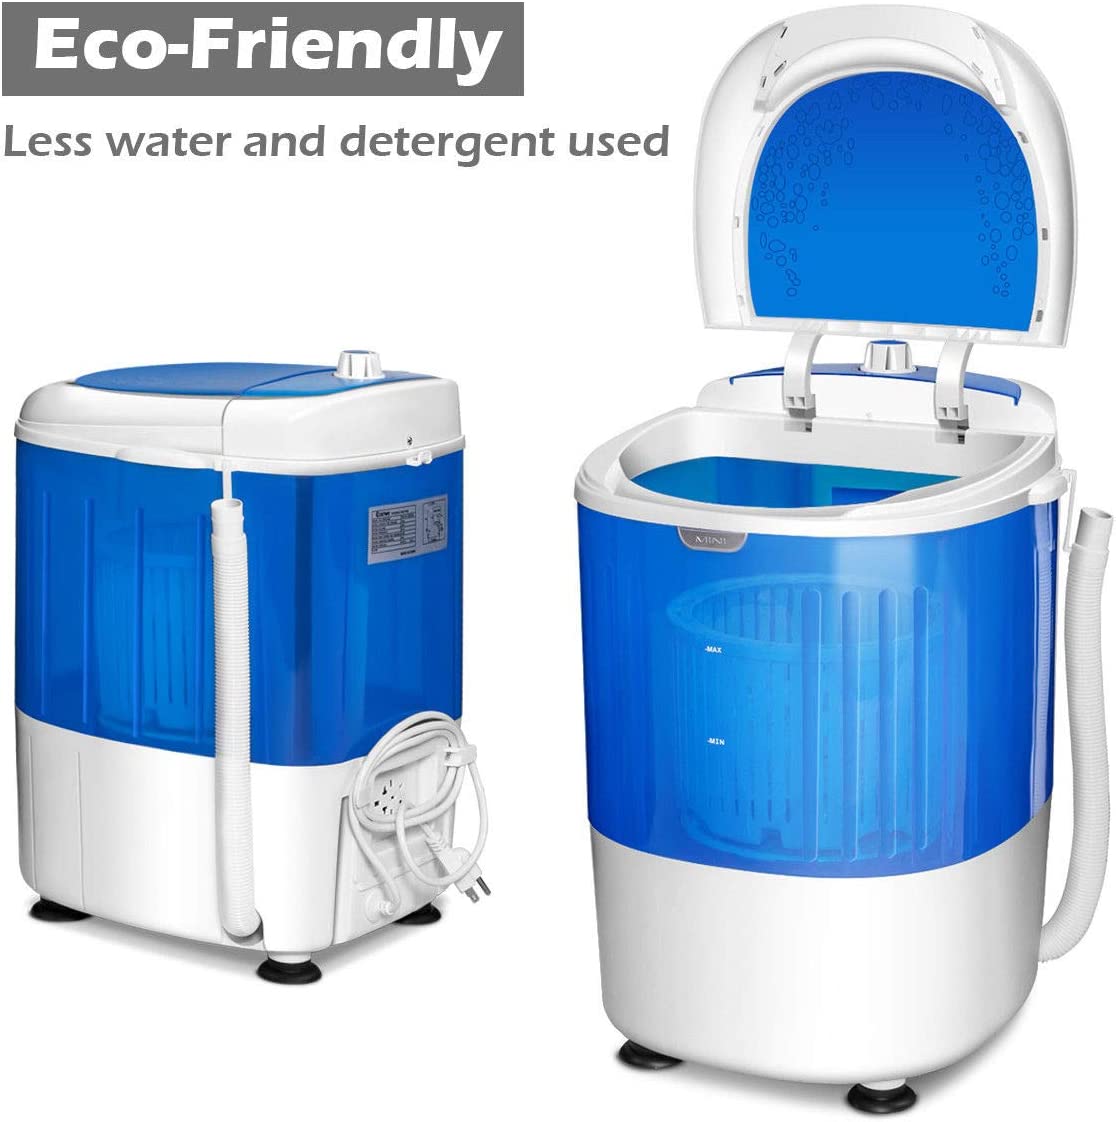 COSTWAY Portable Mini Washing Machine with Spin Dryer, Washing